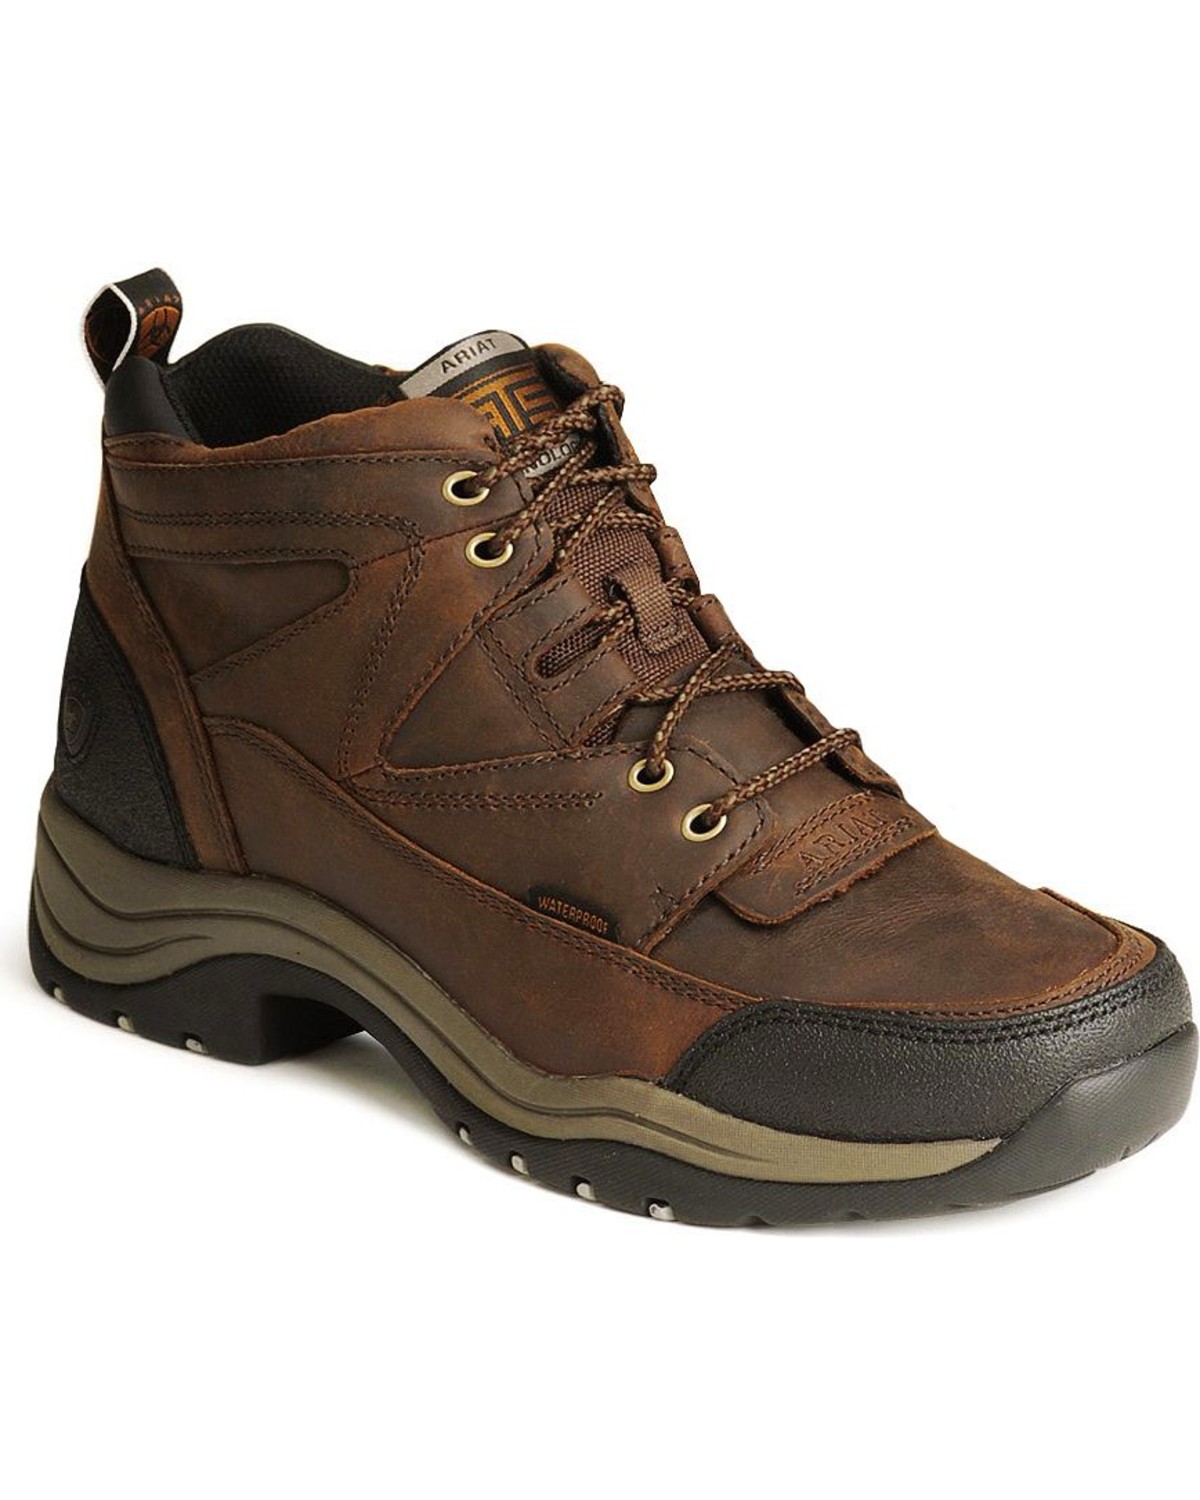 Ariat Men's Terrain H2O 5" Waterproof Work Boots - Round Toe